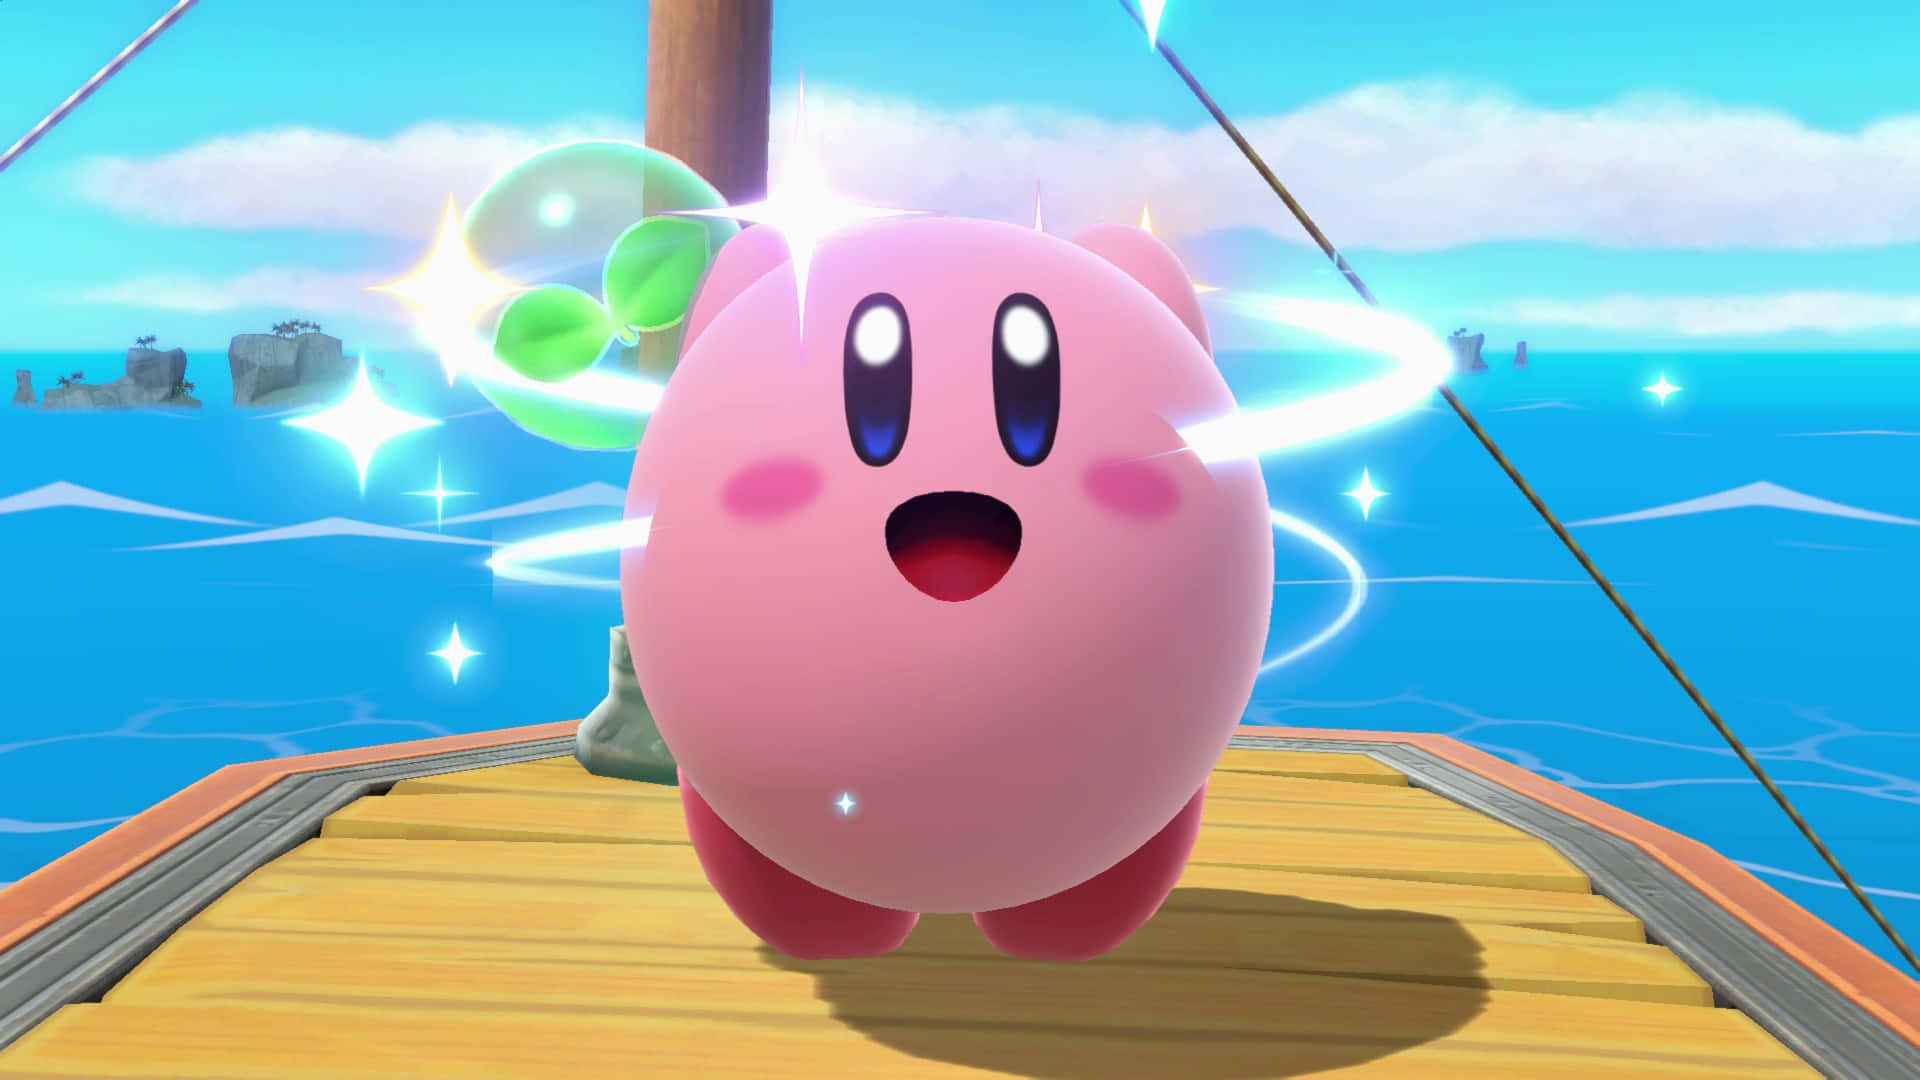 Image  "Kirby, the Cute Puffball!"